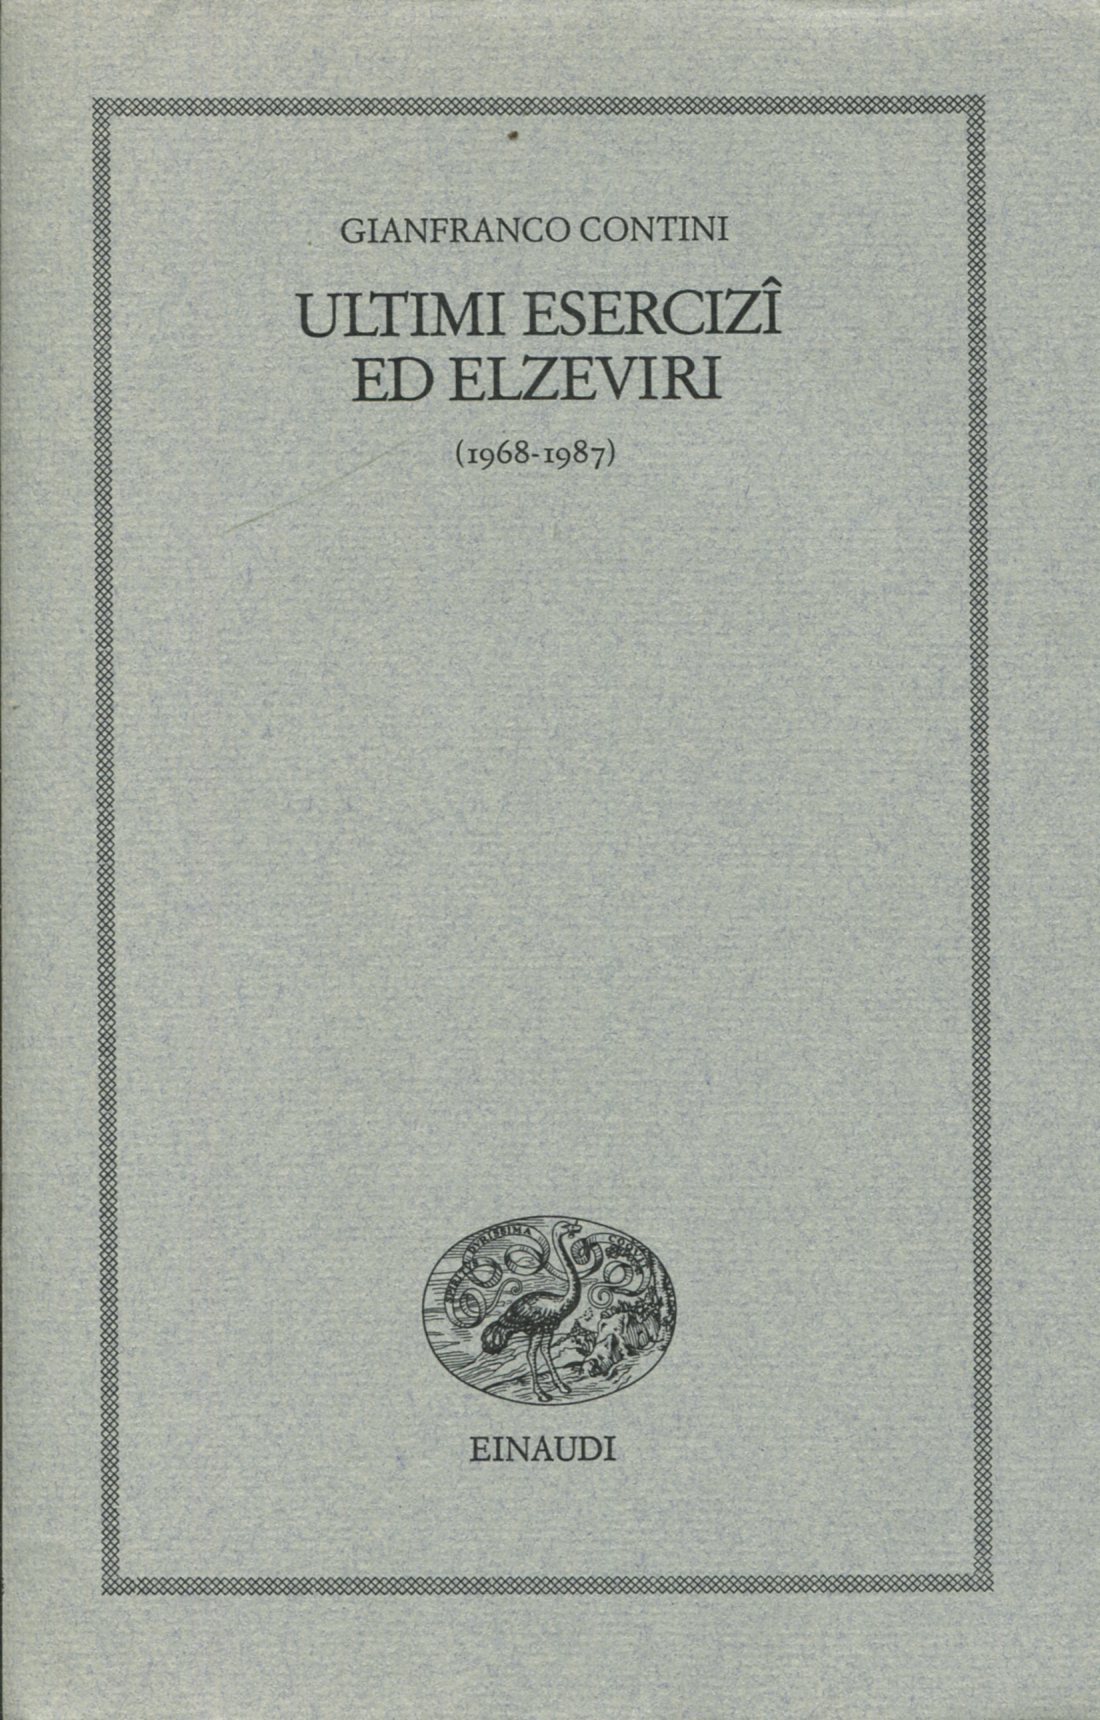 Ultimi esercizi ed elzeviri (1968-1987) - CONTINI, Gianfranco (Domodossola, 1914 - Domodossola, 1990)